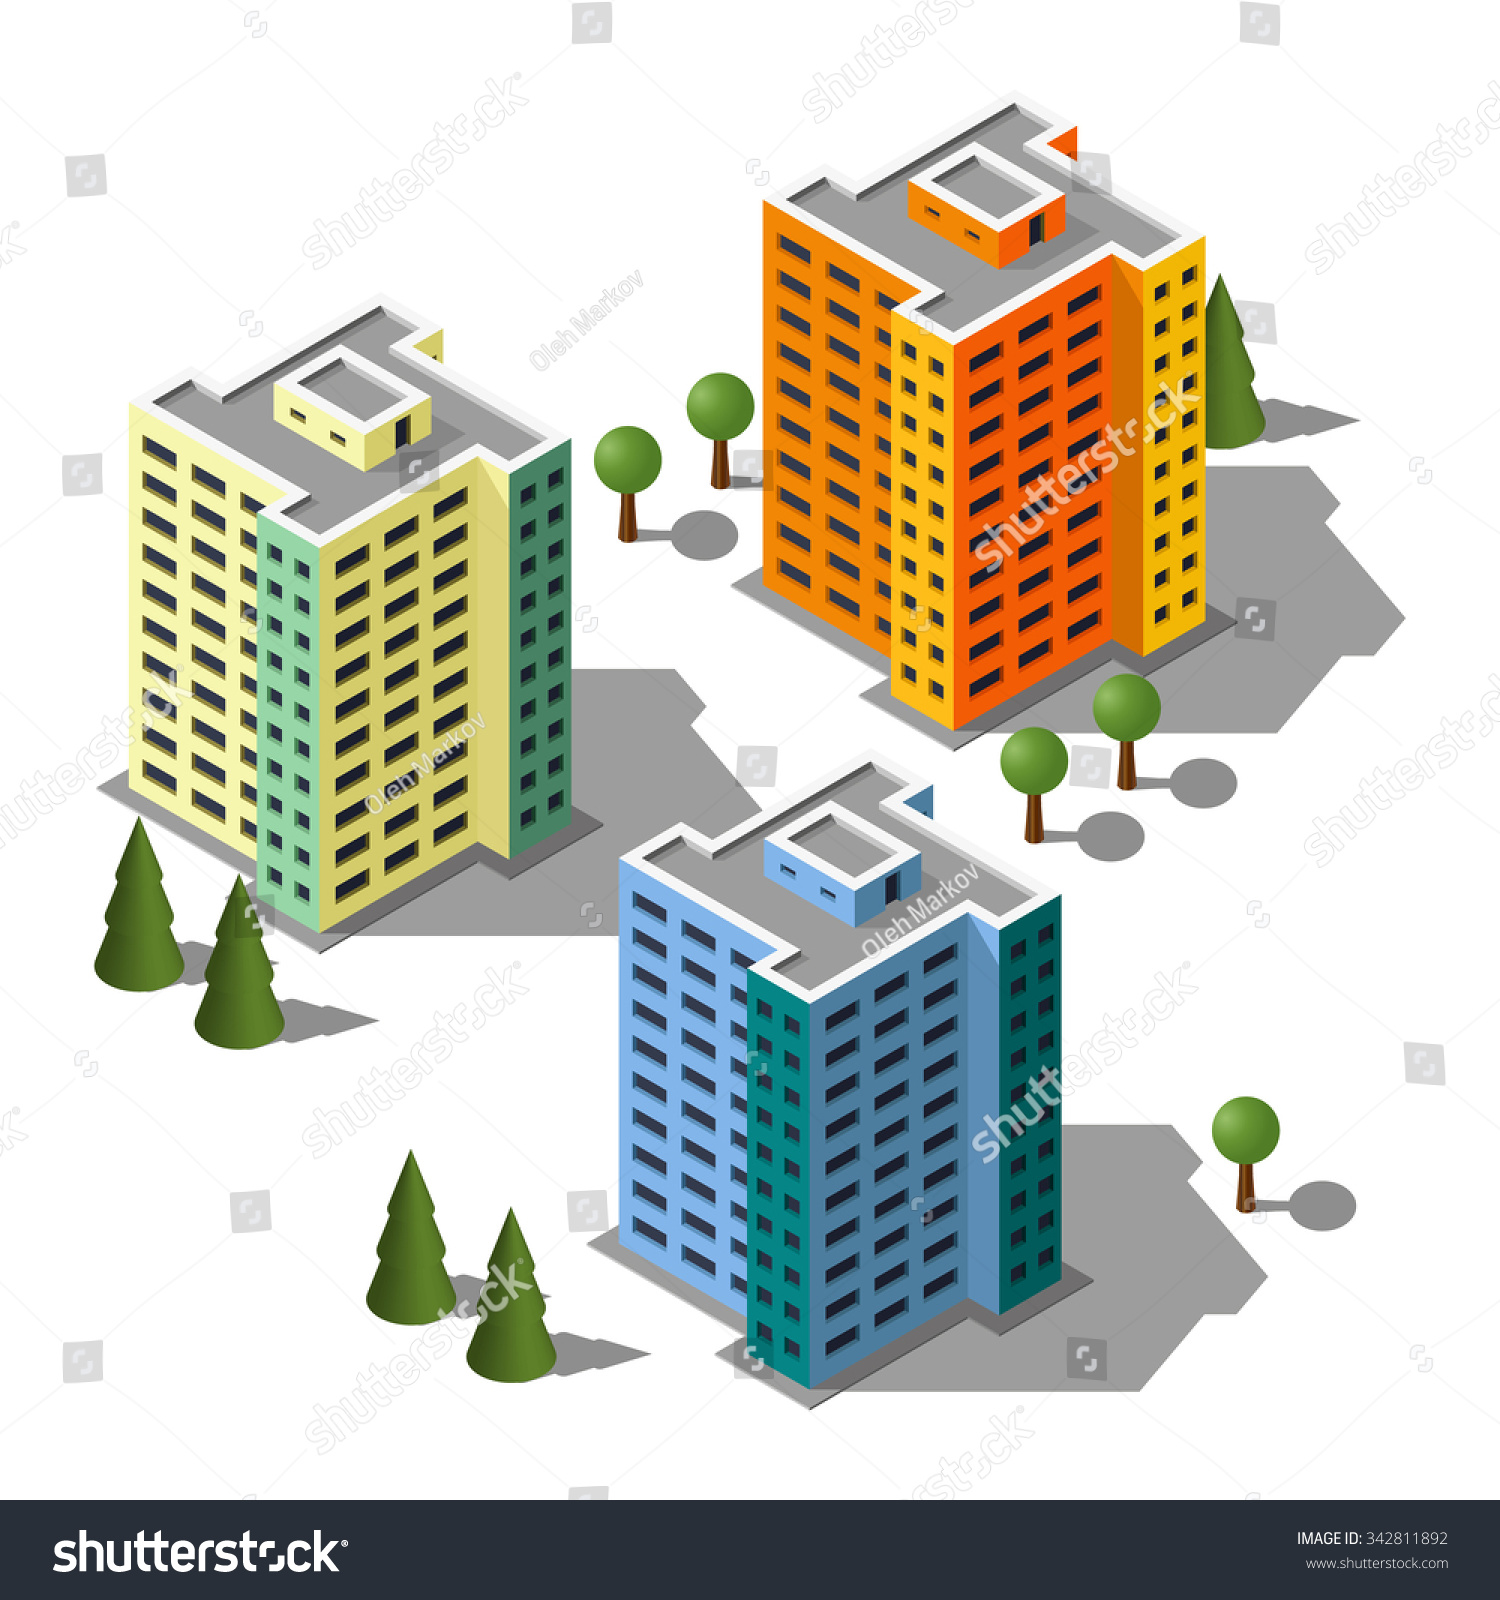 Isometric Buildings Illustration Set 3d Buildings Stock Vector ...